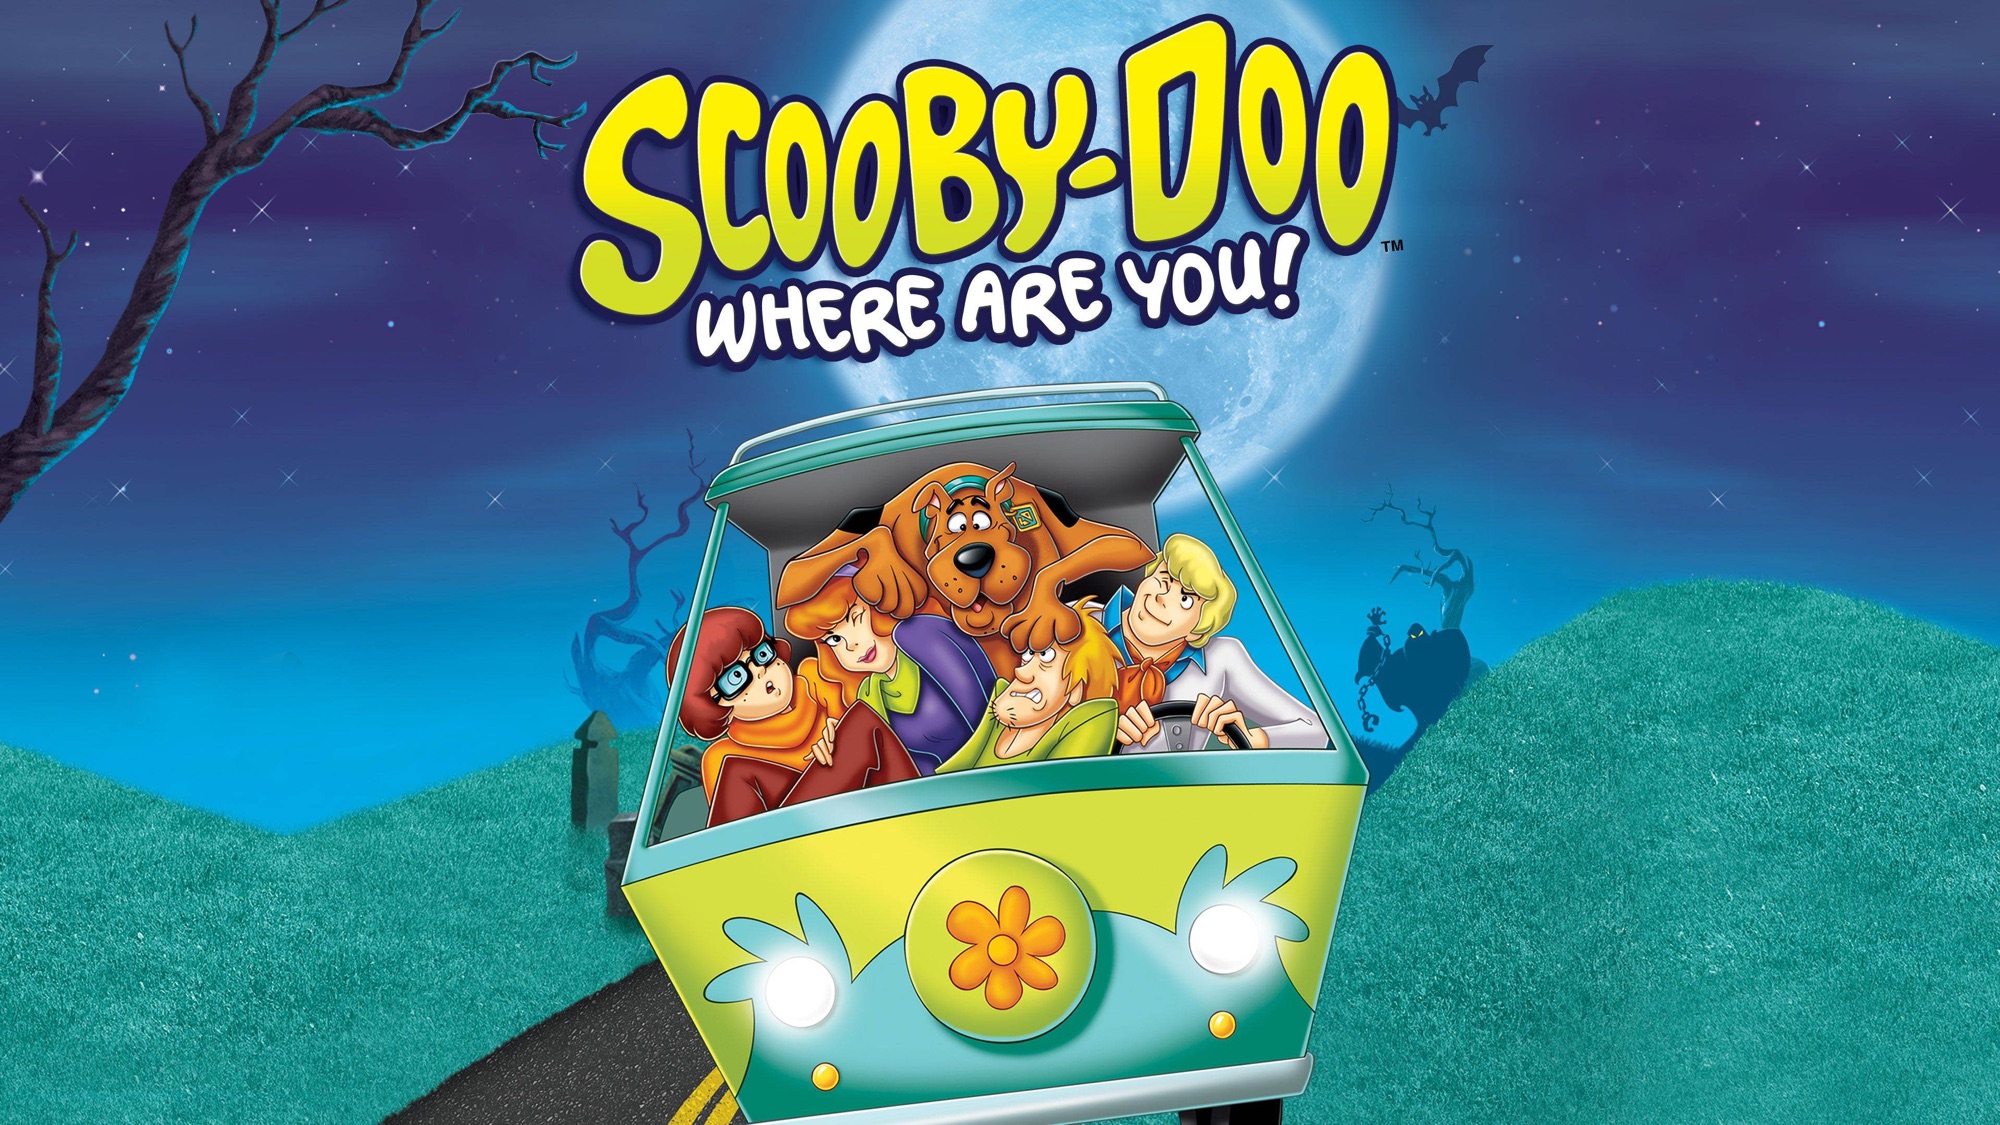 Free Scooby Doo Wallpaper, Scooby Doo Wallpaper Download - WallpaperUse - 1